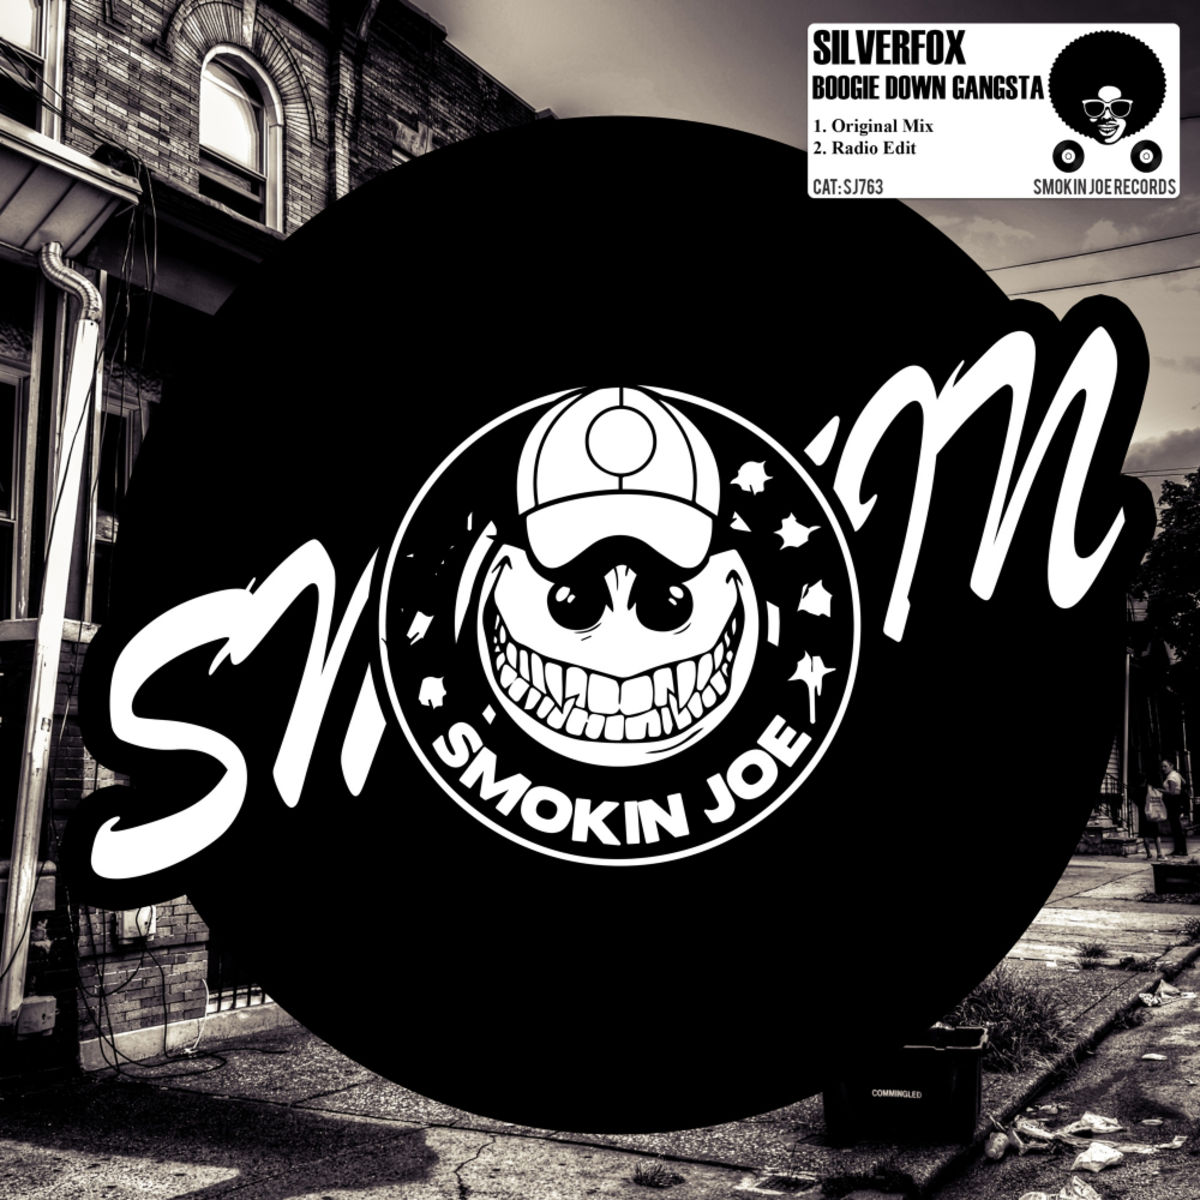 Silverfox - Boogie Down Gangsta / Smokin Joe Records